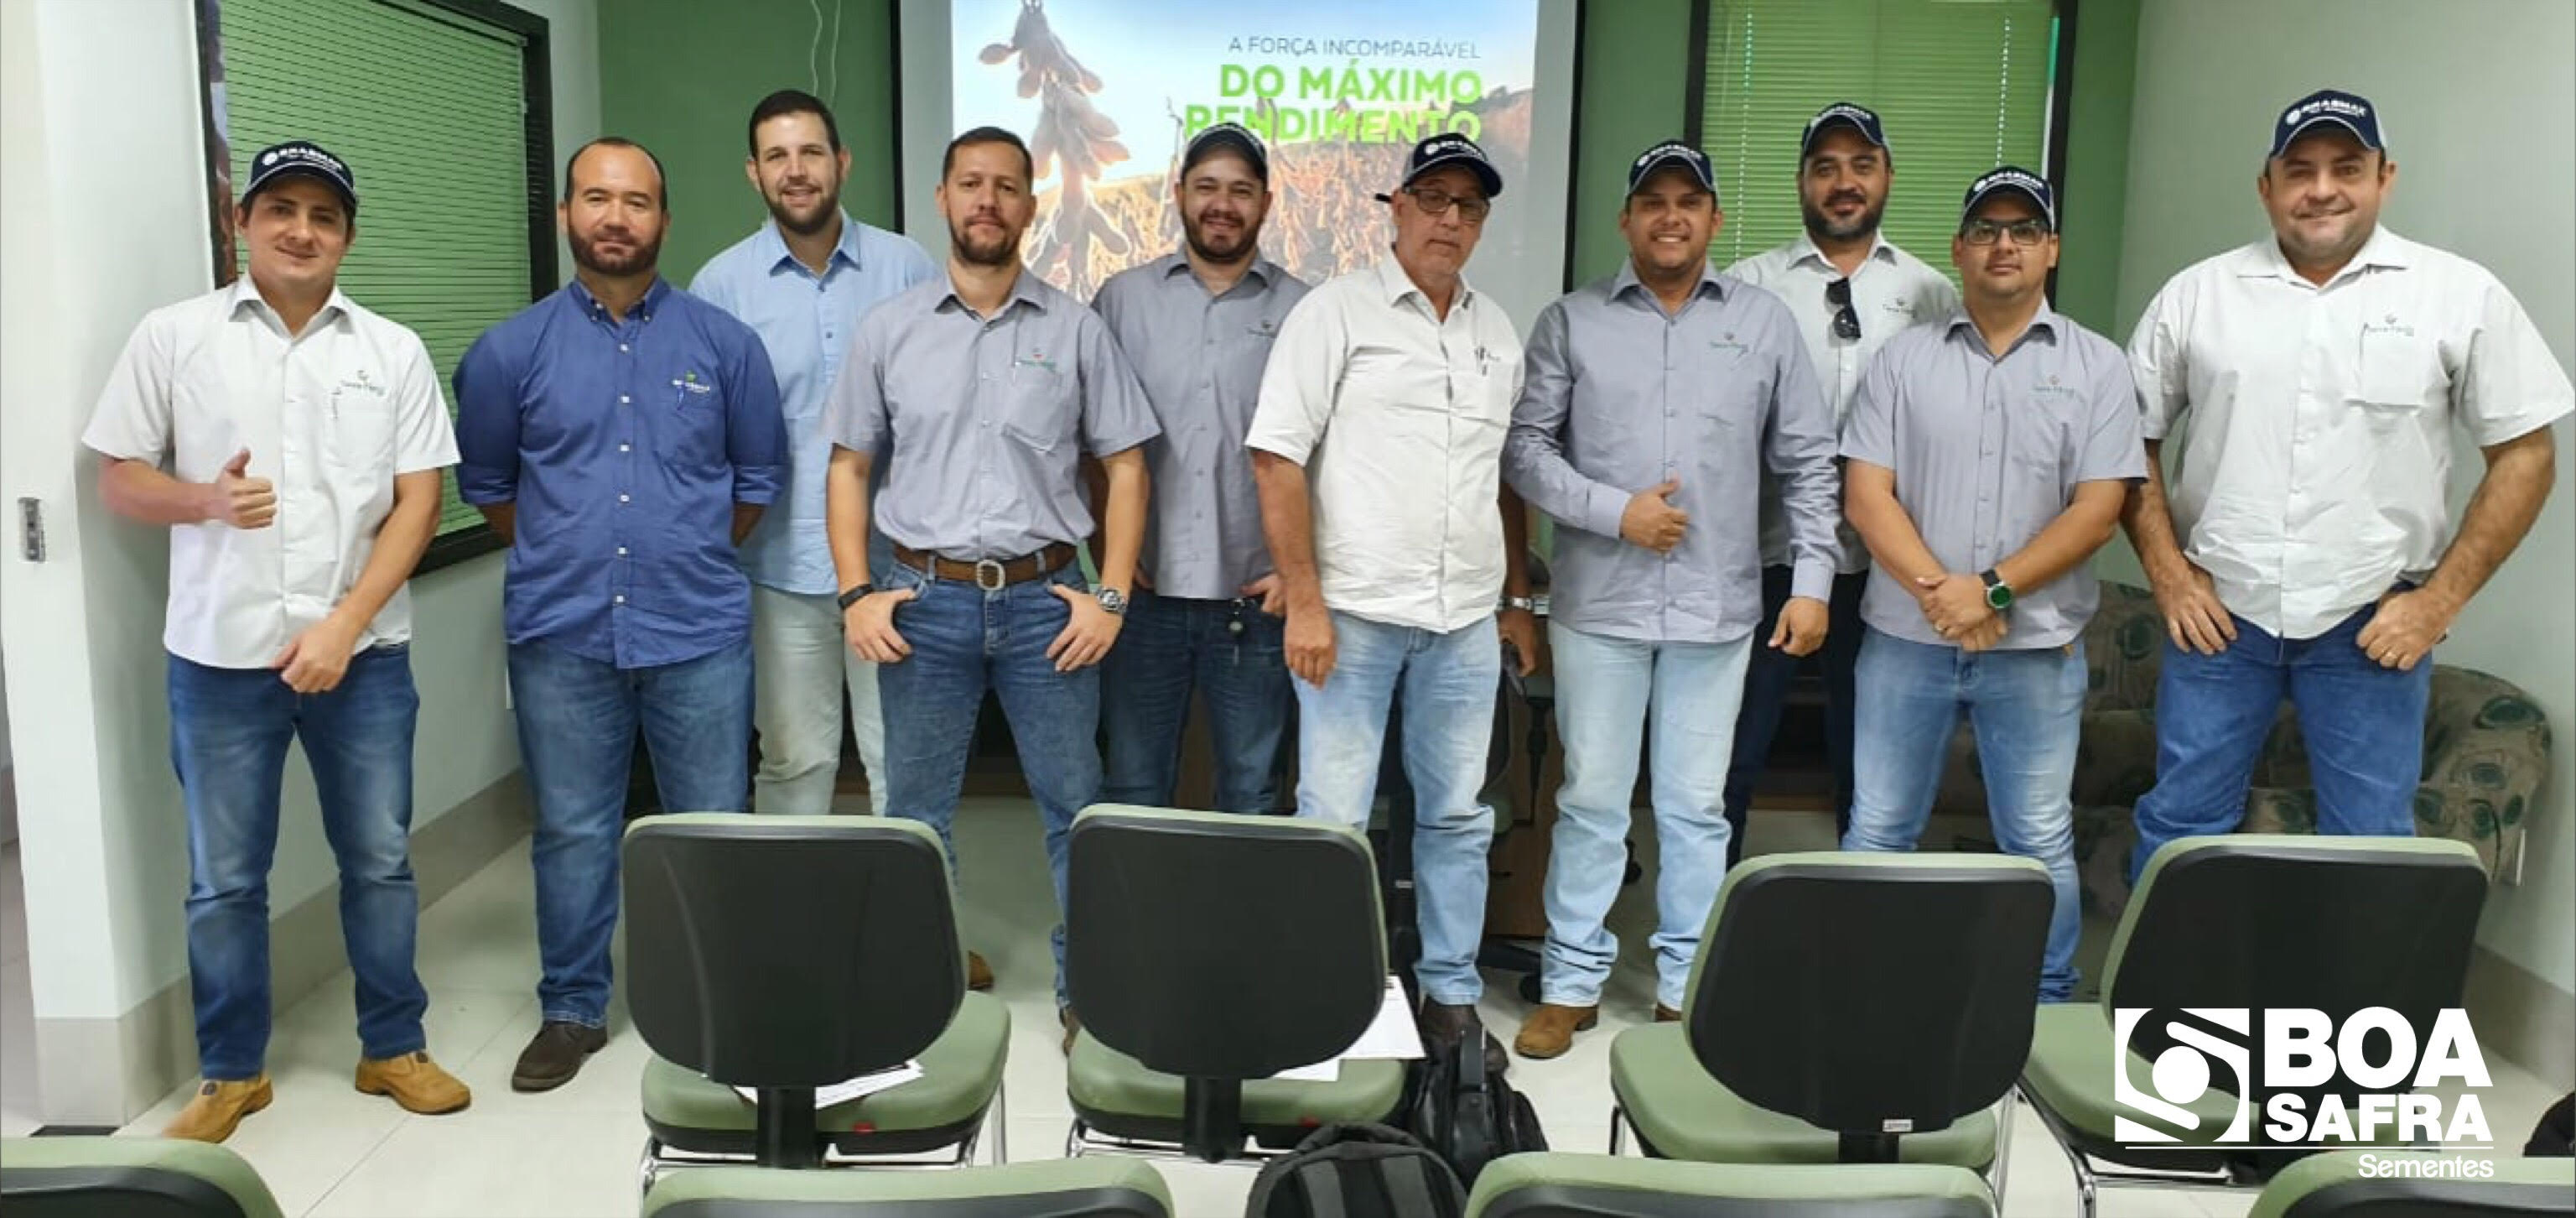 Boa Safra realiza treinamento técnico na revenda Terra Fértil Agro